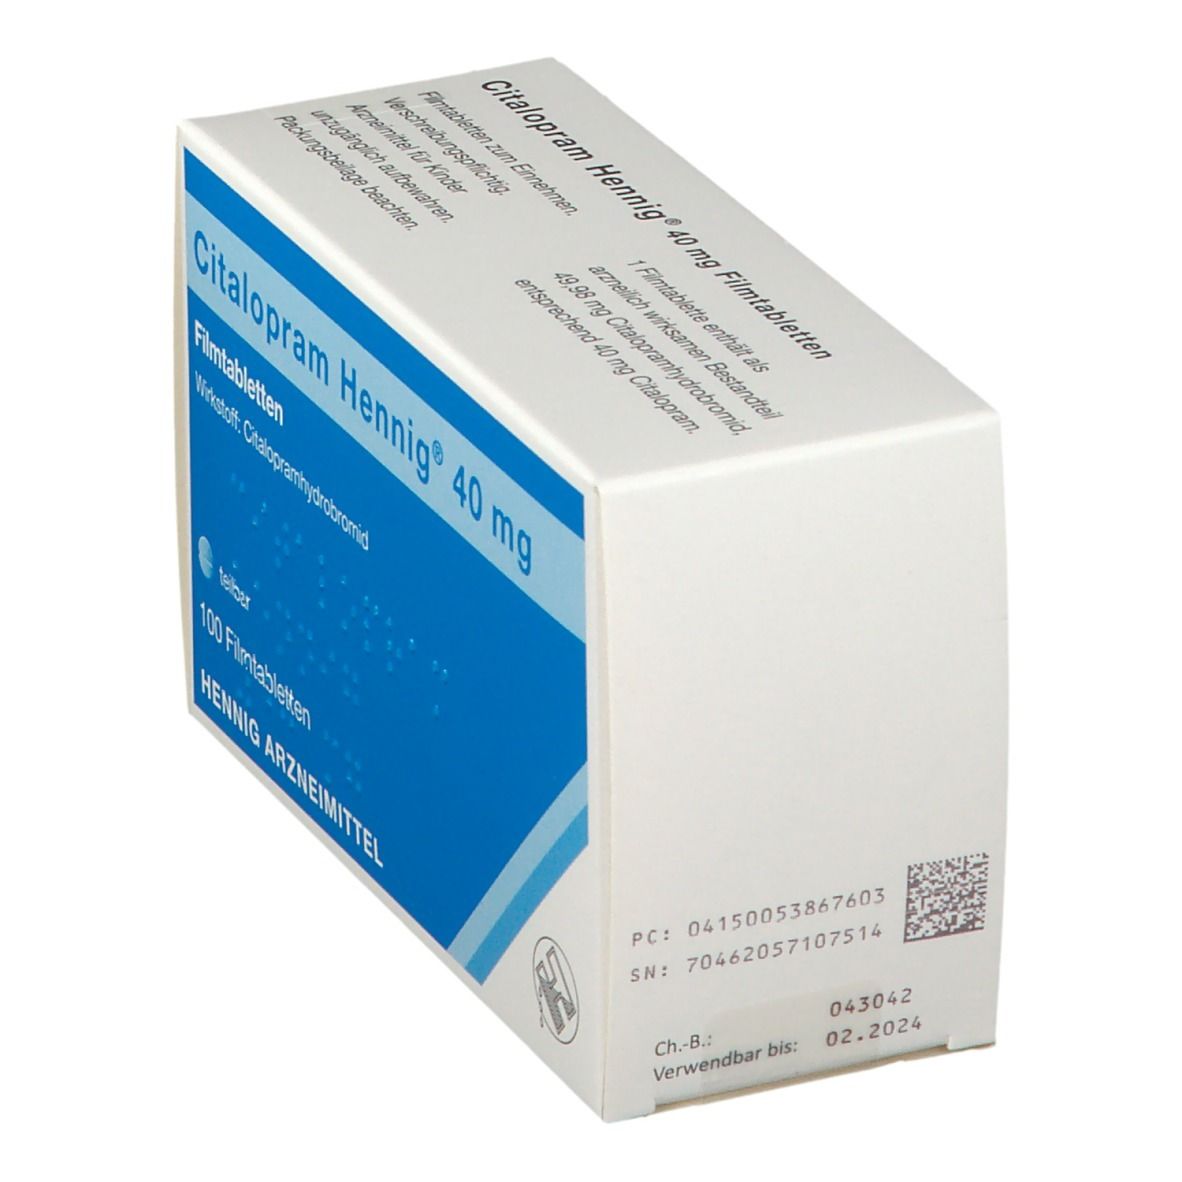 Citalopram Hennig® 40 mg